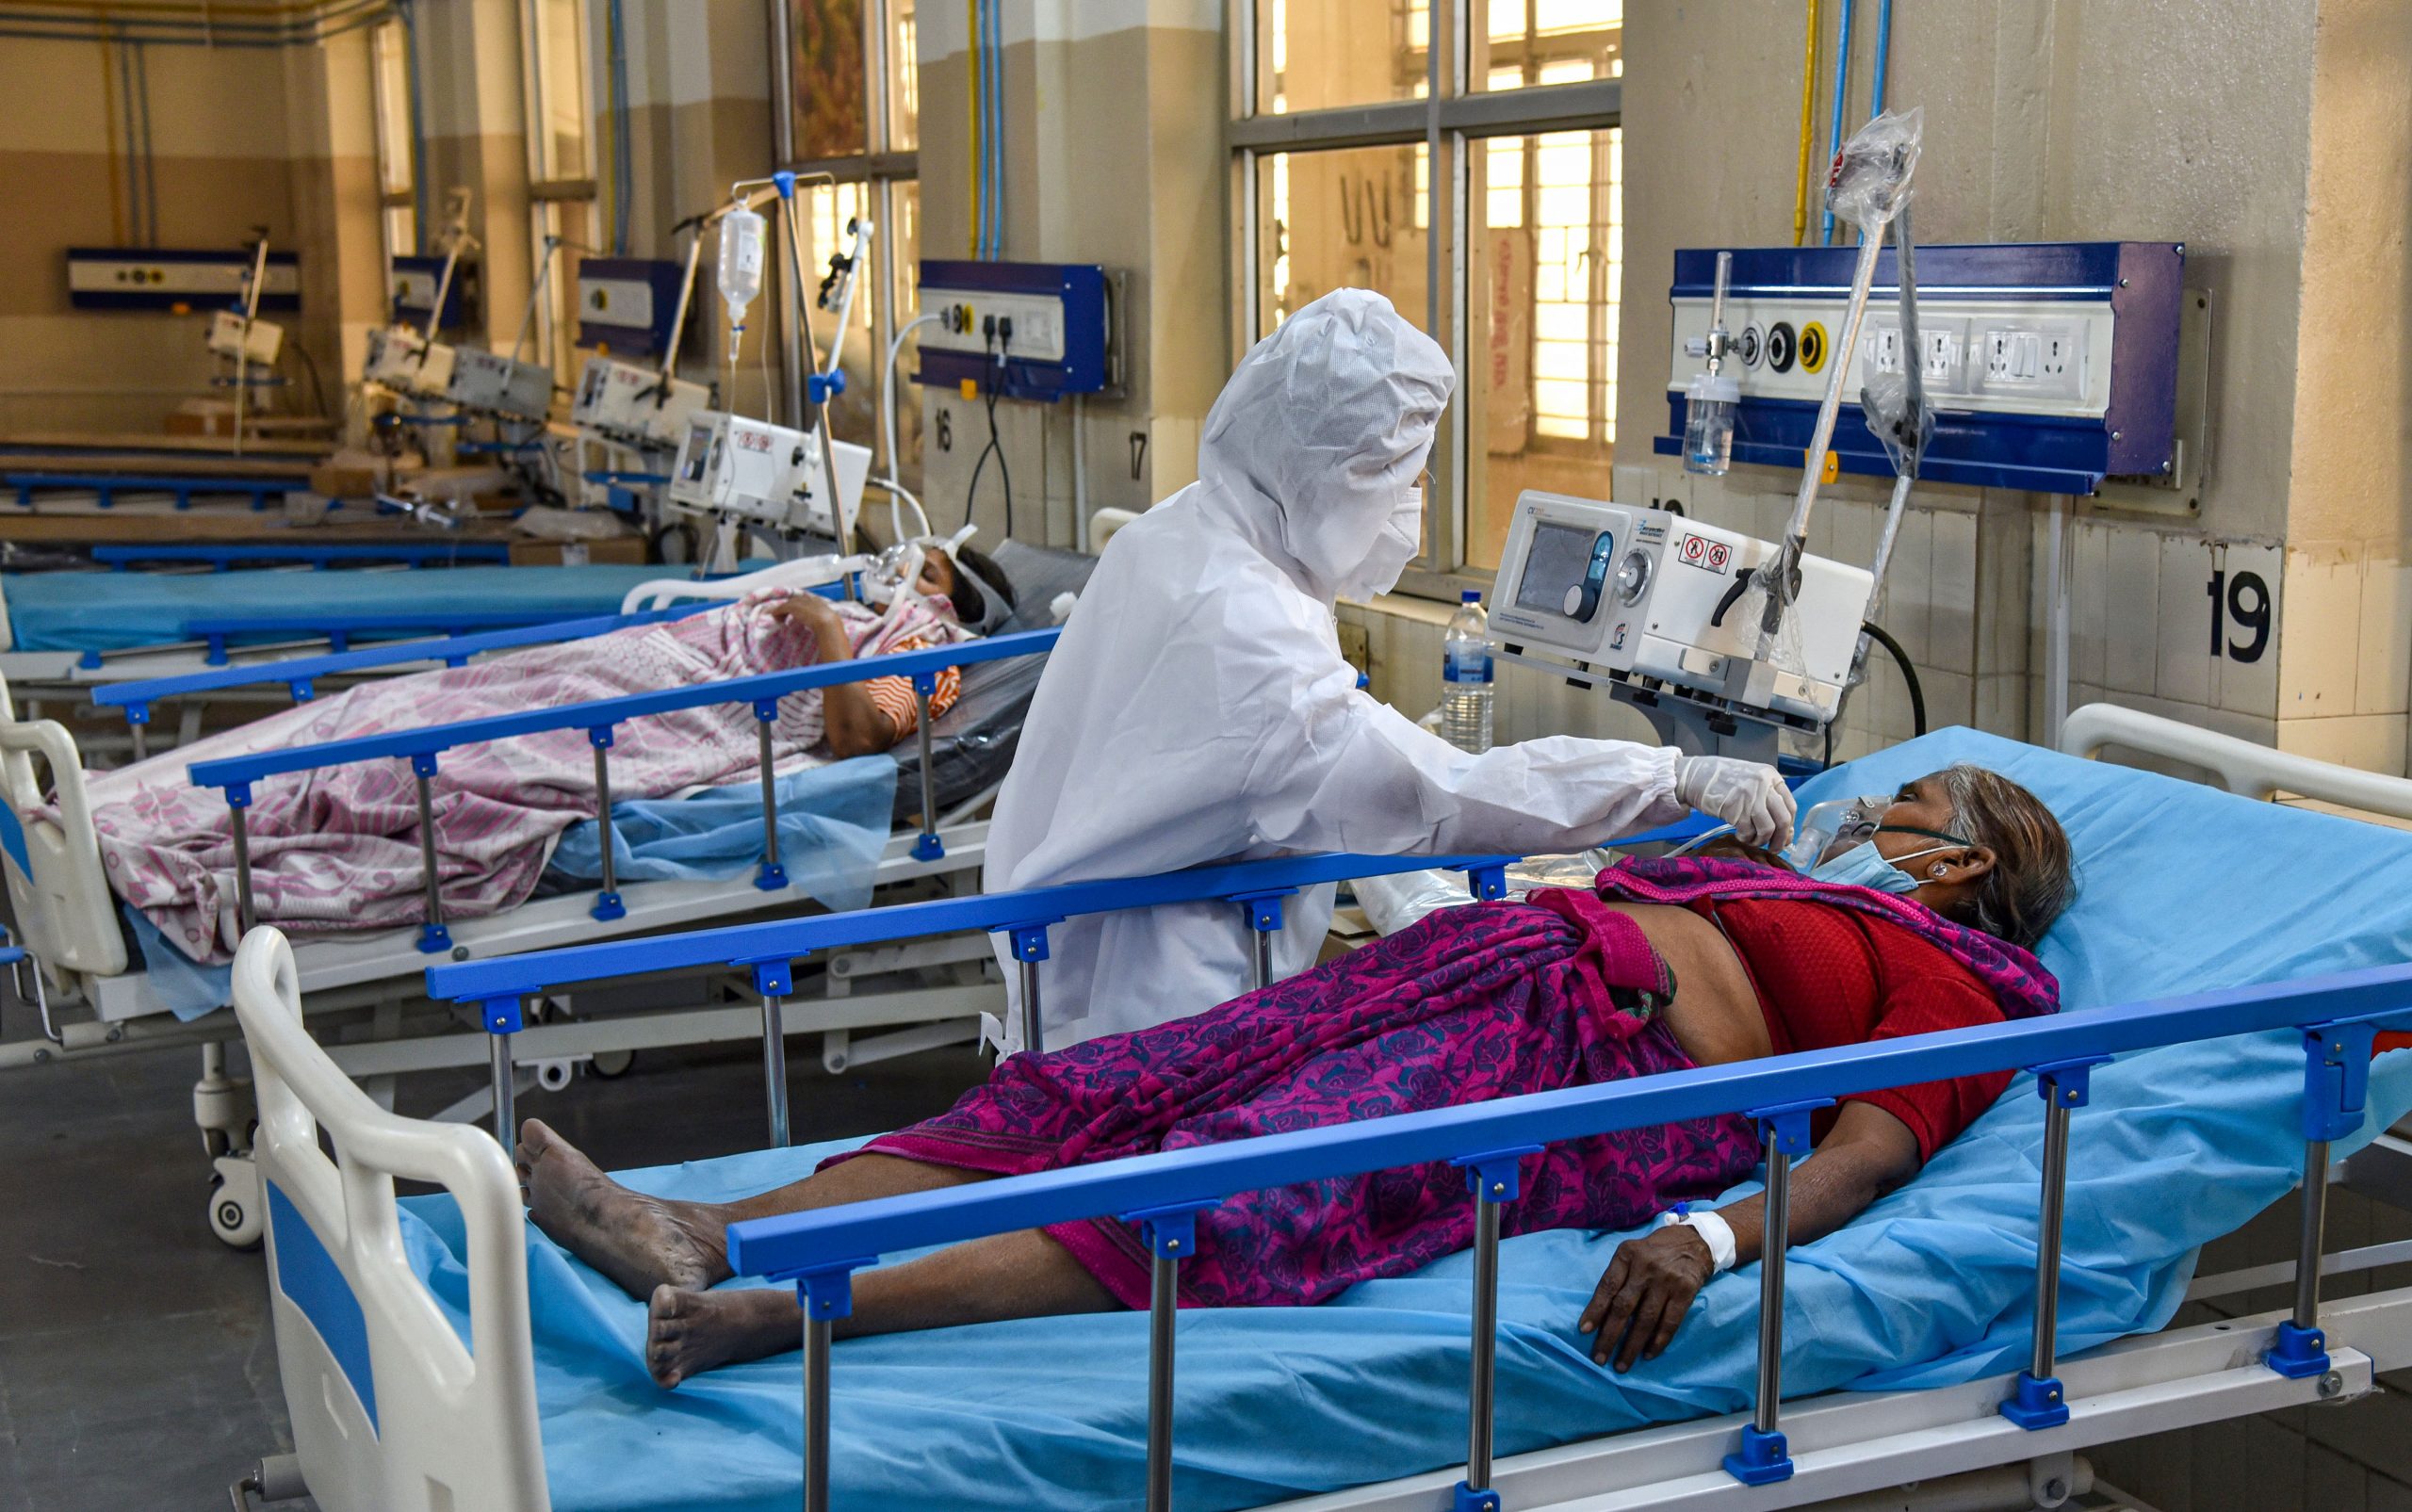 Tamil Nadu: 13 deaths at Chengalpattu hospital, officials deny oxygen shortage